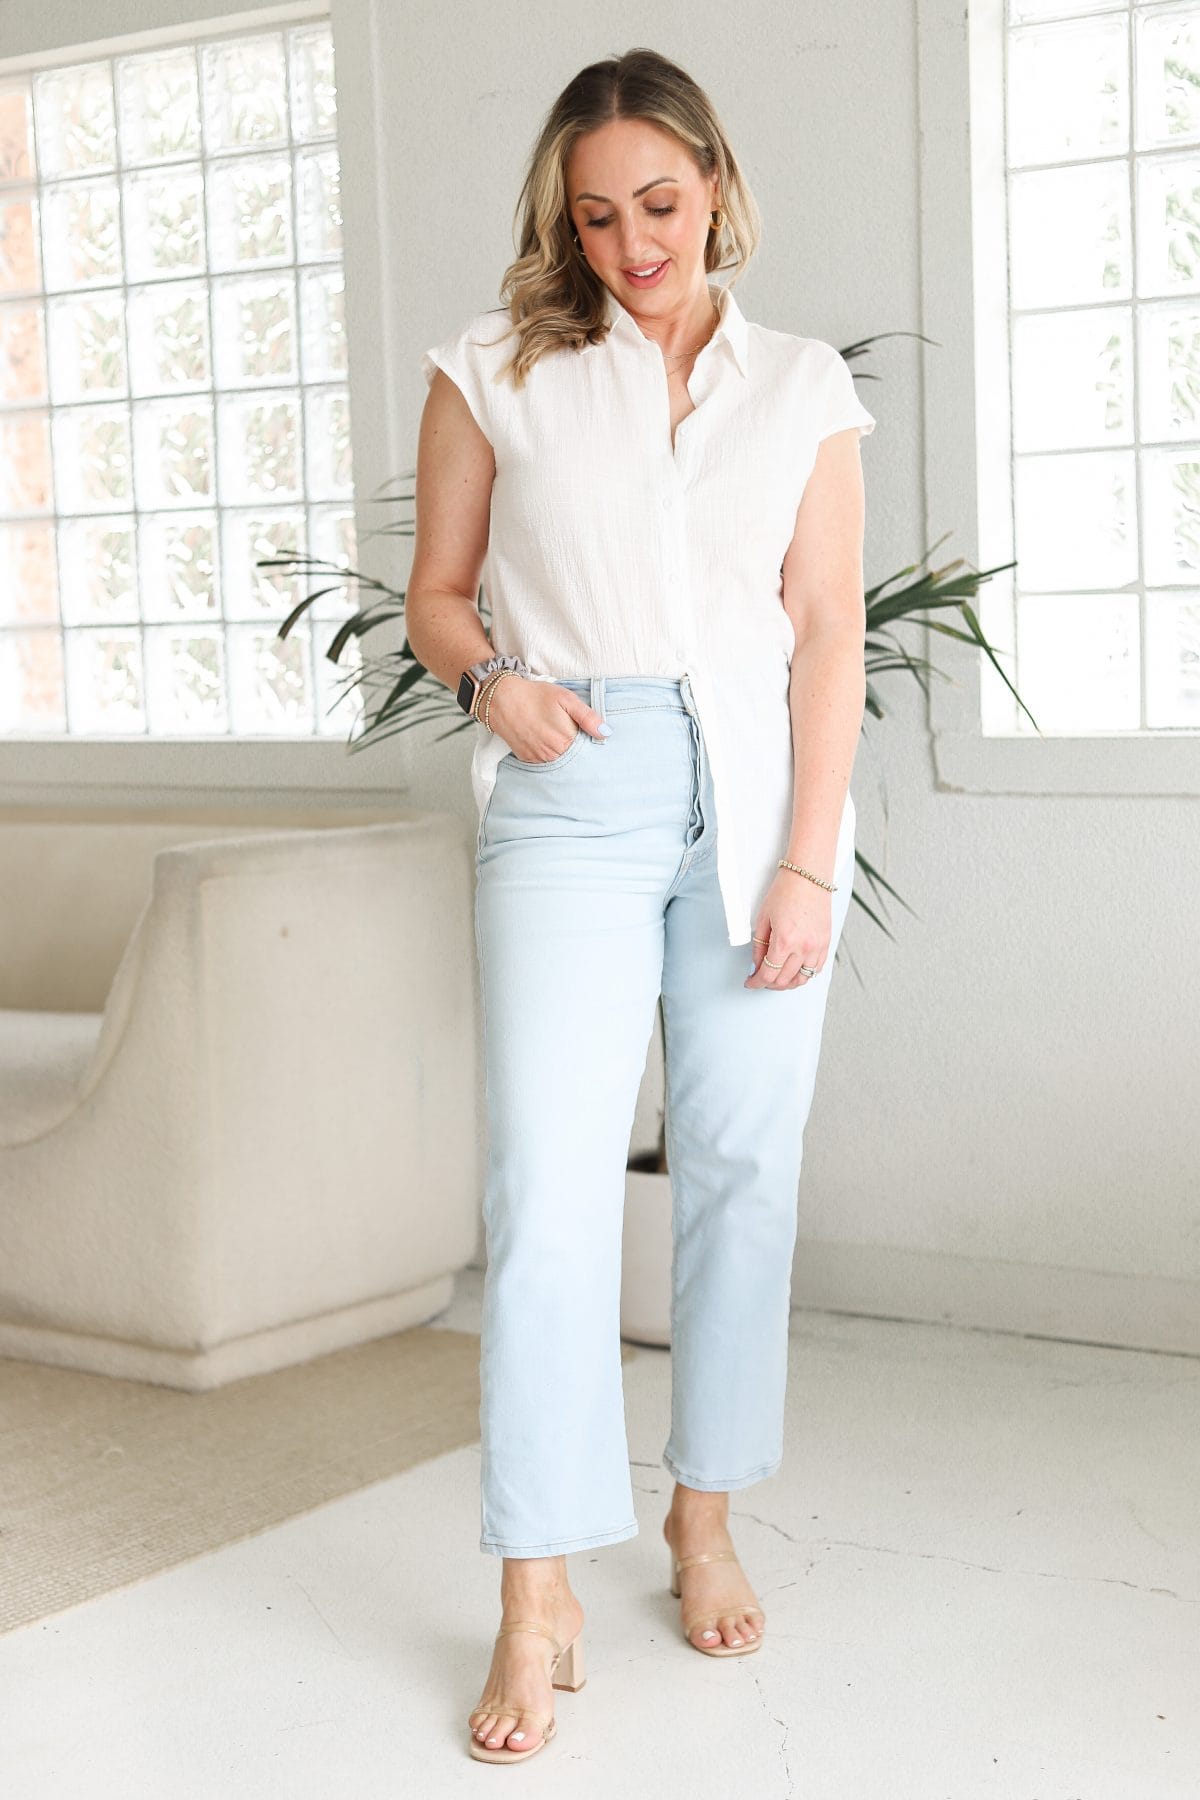 Amazon Fashion Basics 2022 - white button down shirt